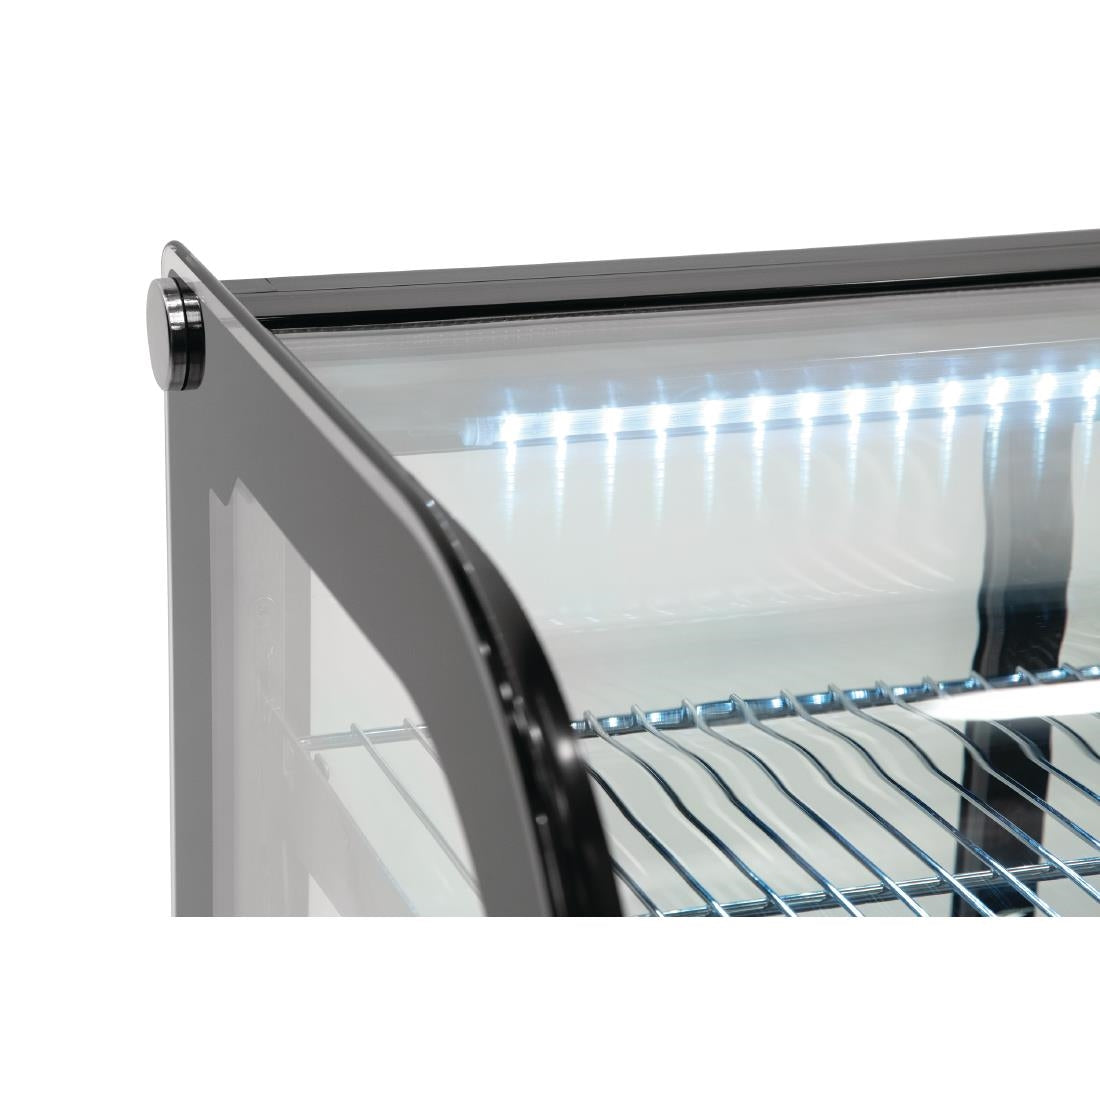 GP292 Polar G-Series Energy Efficient Countertop Food Display Fridge Black 120Ltr